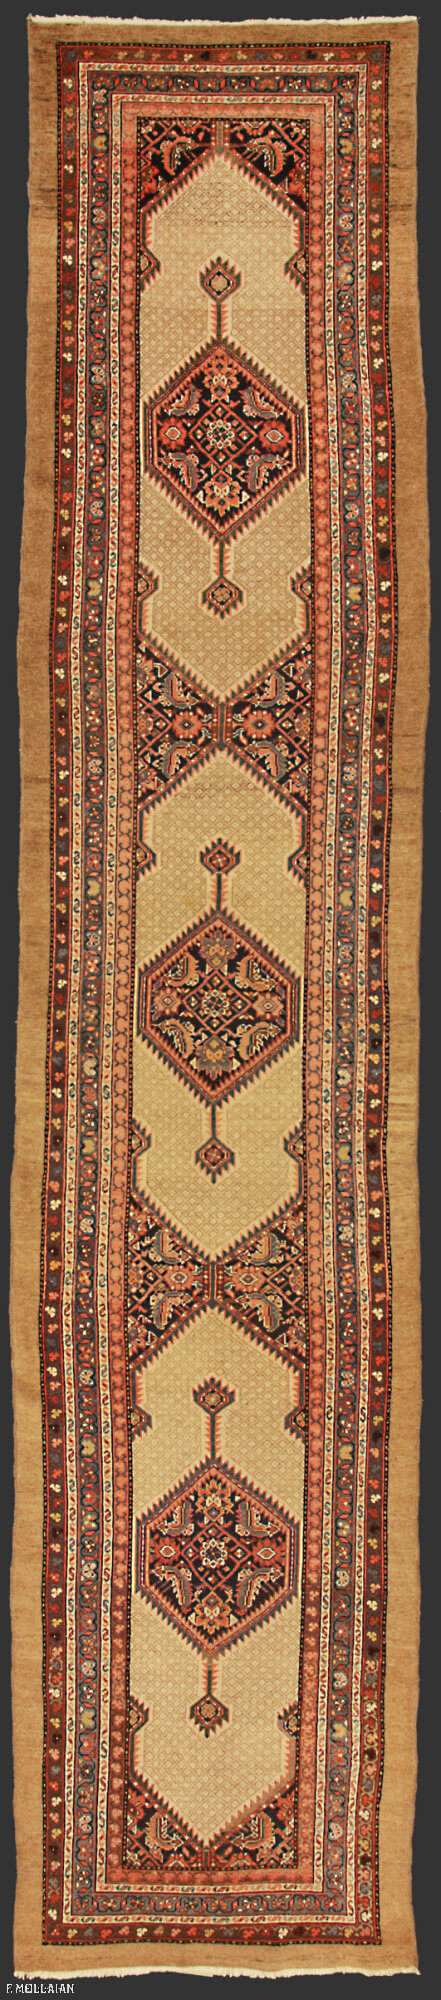 A Very Long Antique Persian Hamedan Runner n°:67831312